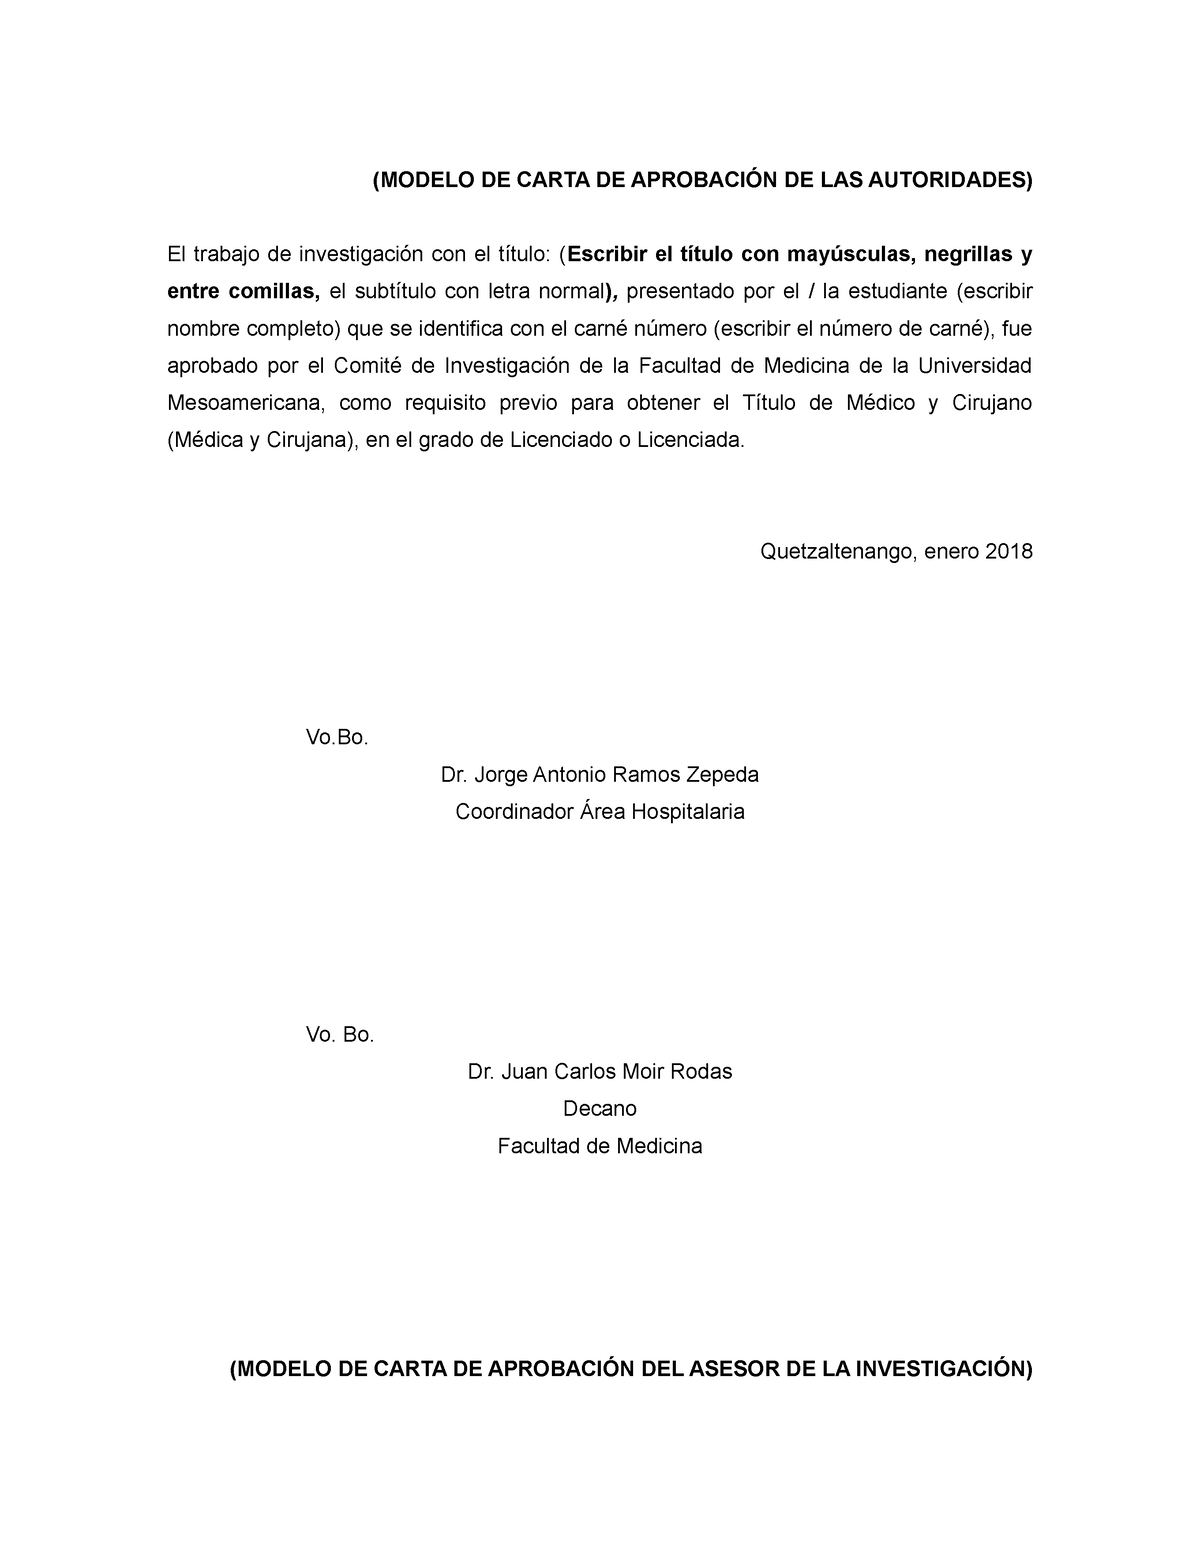 Modelo DE Cartas PARA Informe Final MODELO DE CARTA DE APROBACIÓN DE LAS AUTORIDADES El